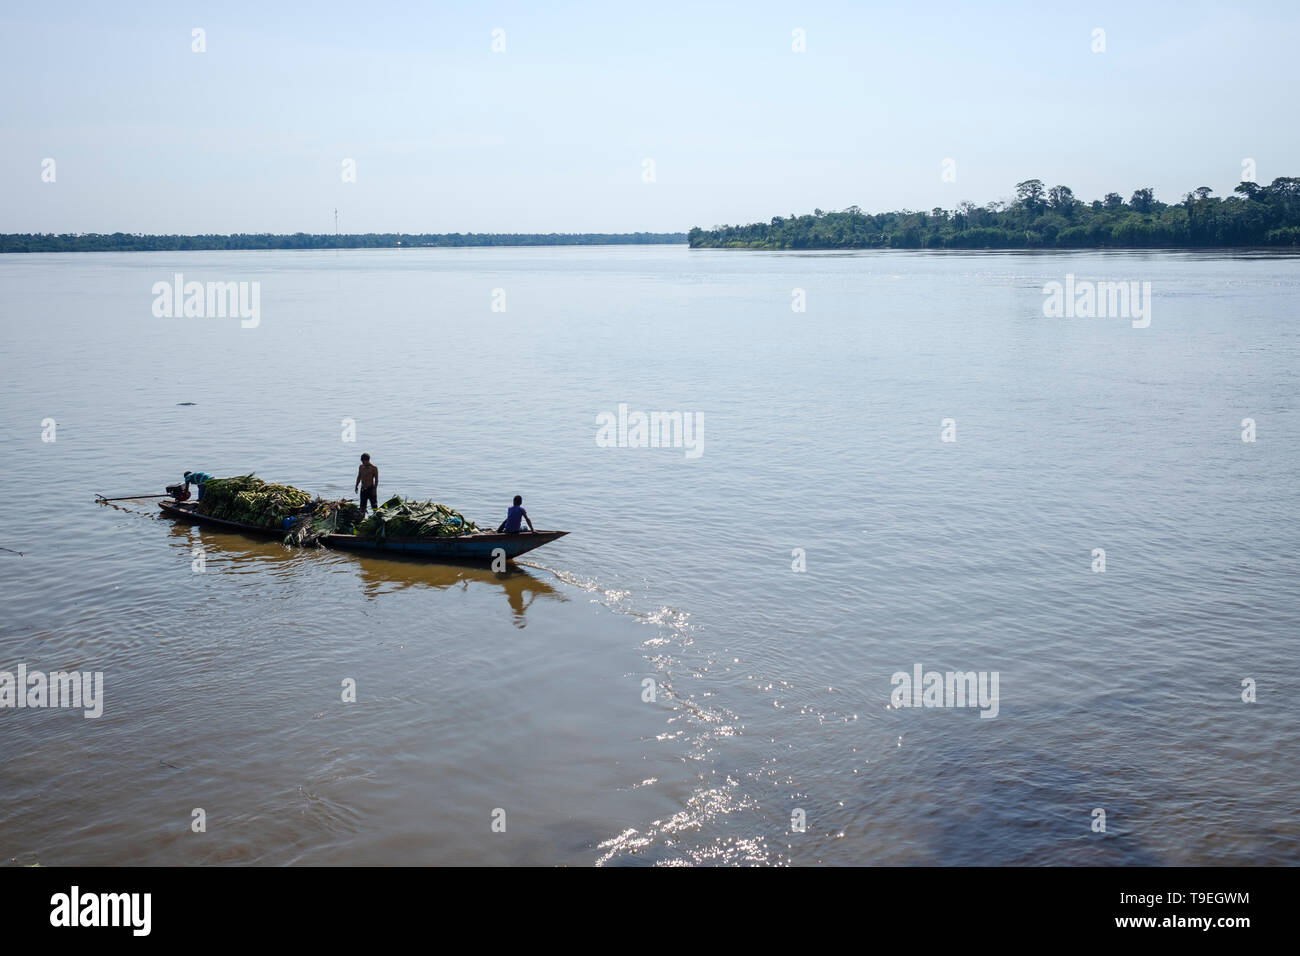 Amazon banana boat hi-res stock photography and images - Alamy